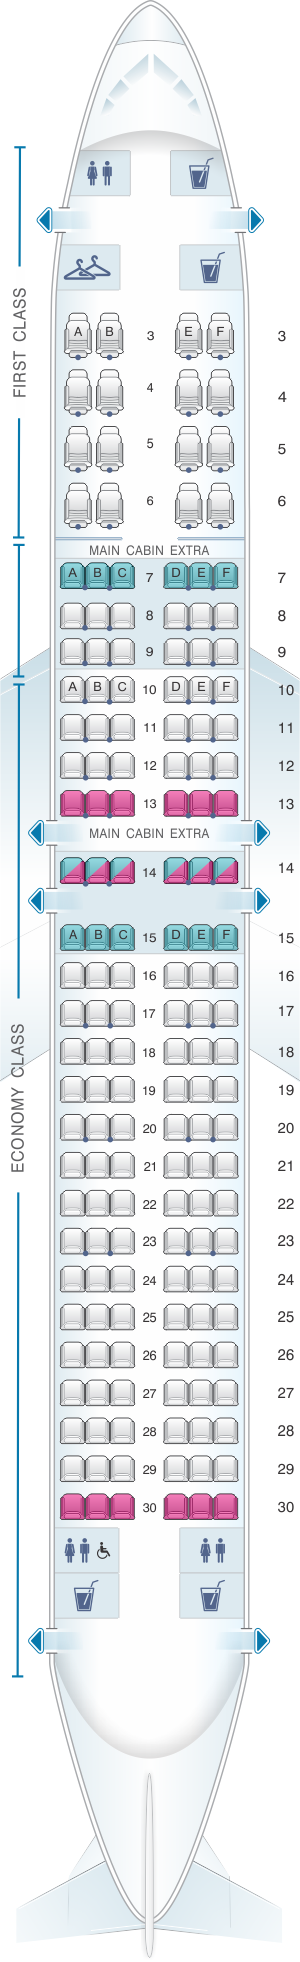 Seat Map American Airlines Boeing B737 800 | SeatMaestro